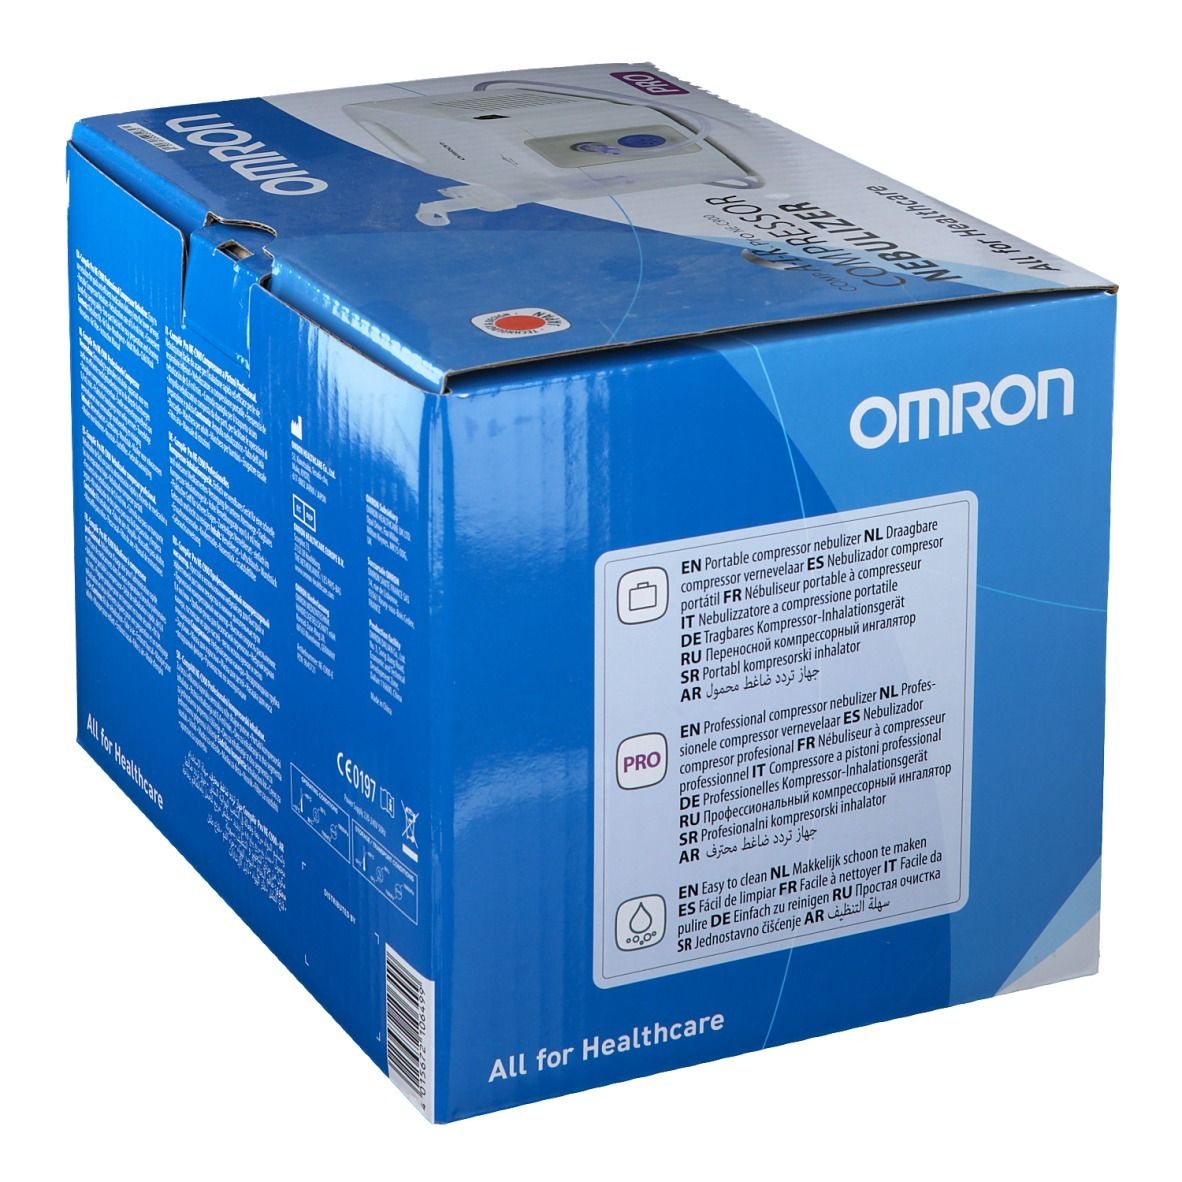 Omron nébuliseur Comp Air Pro C900 - Aérosol médical